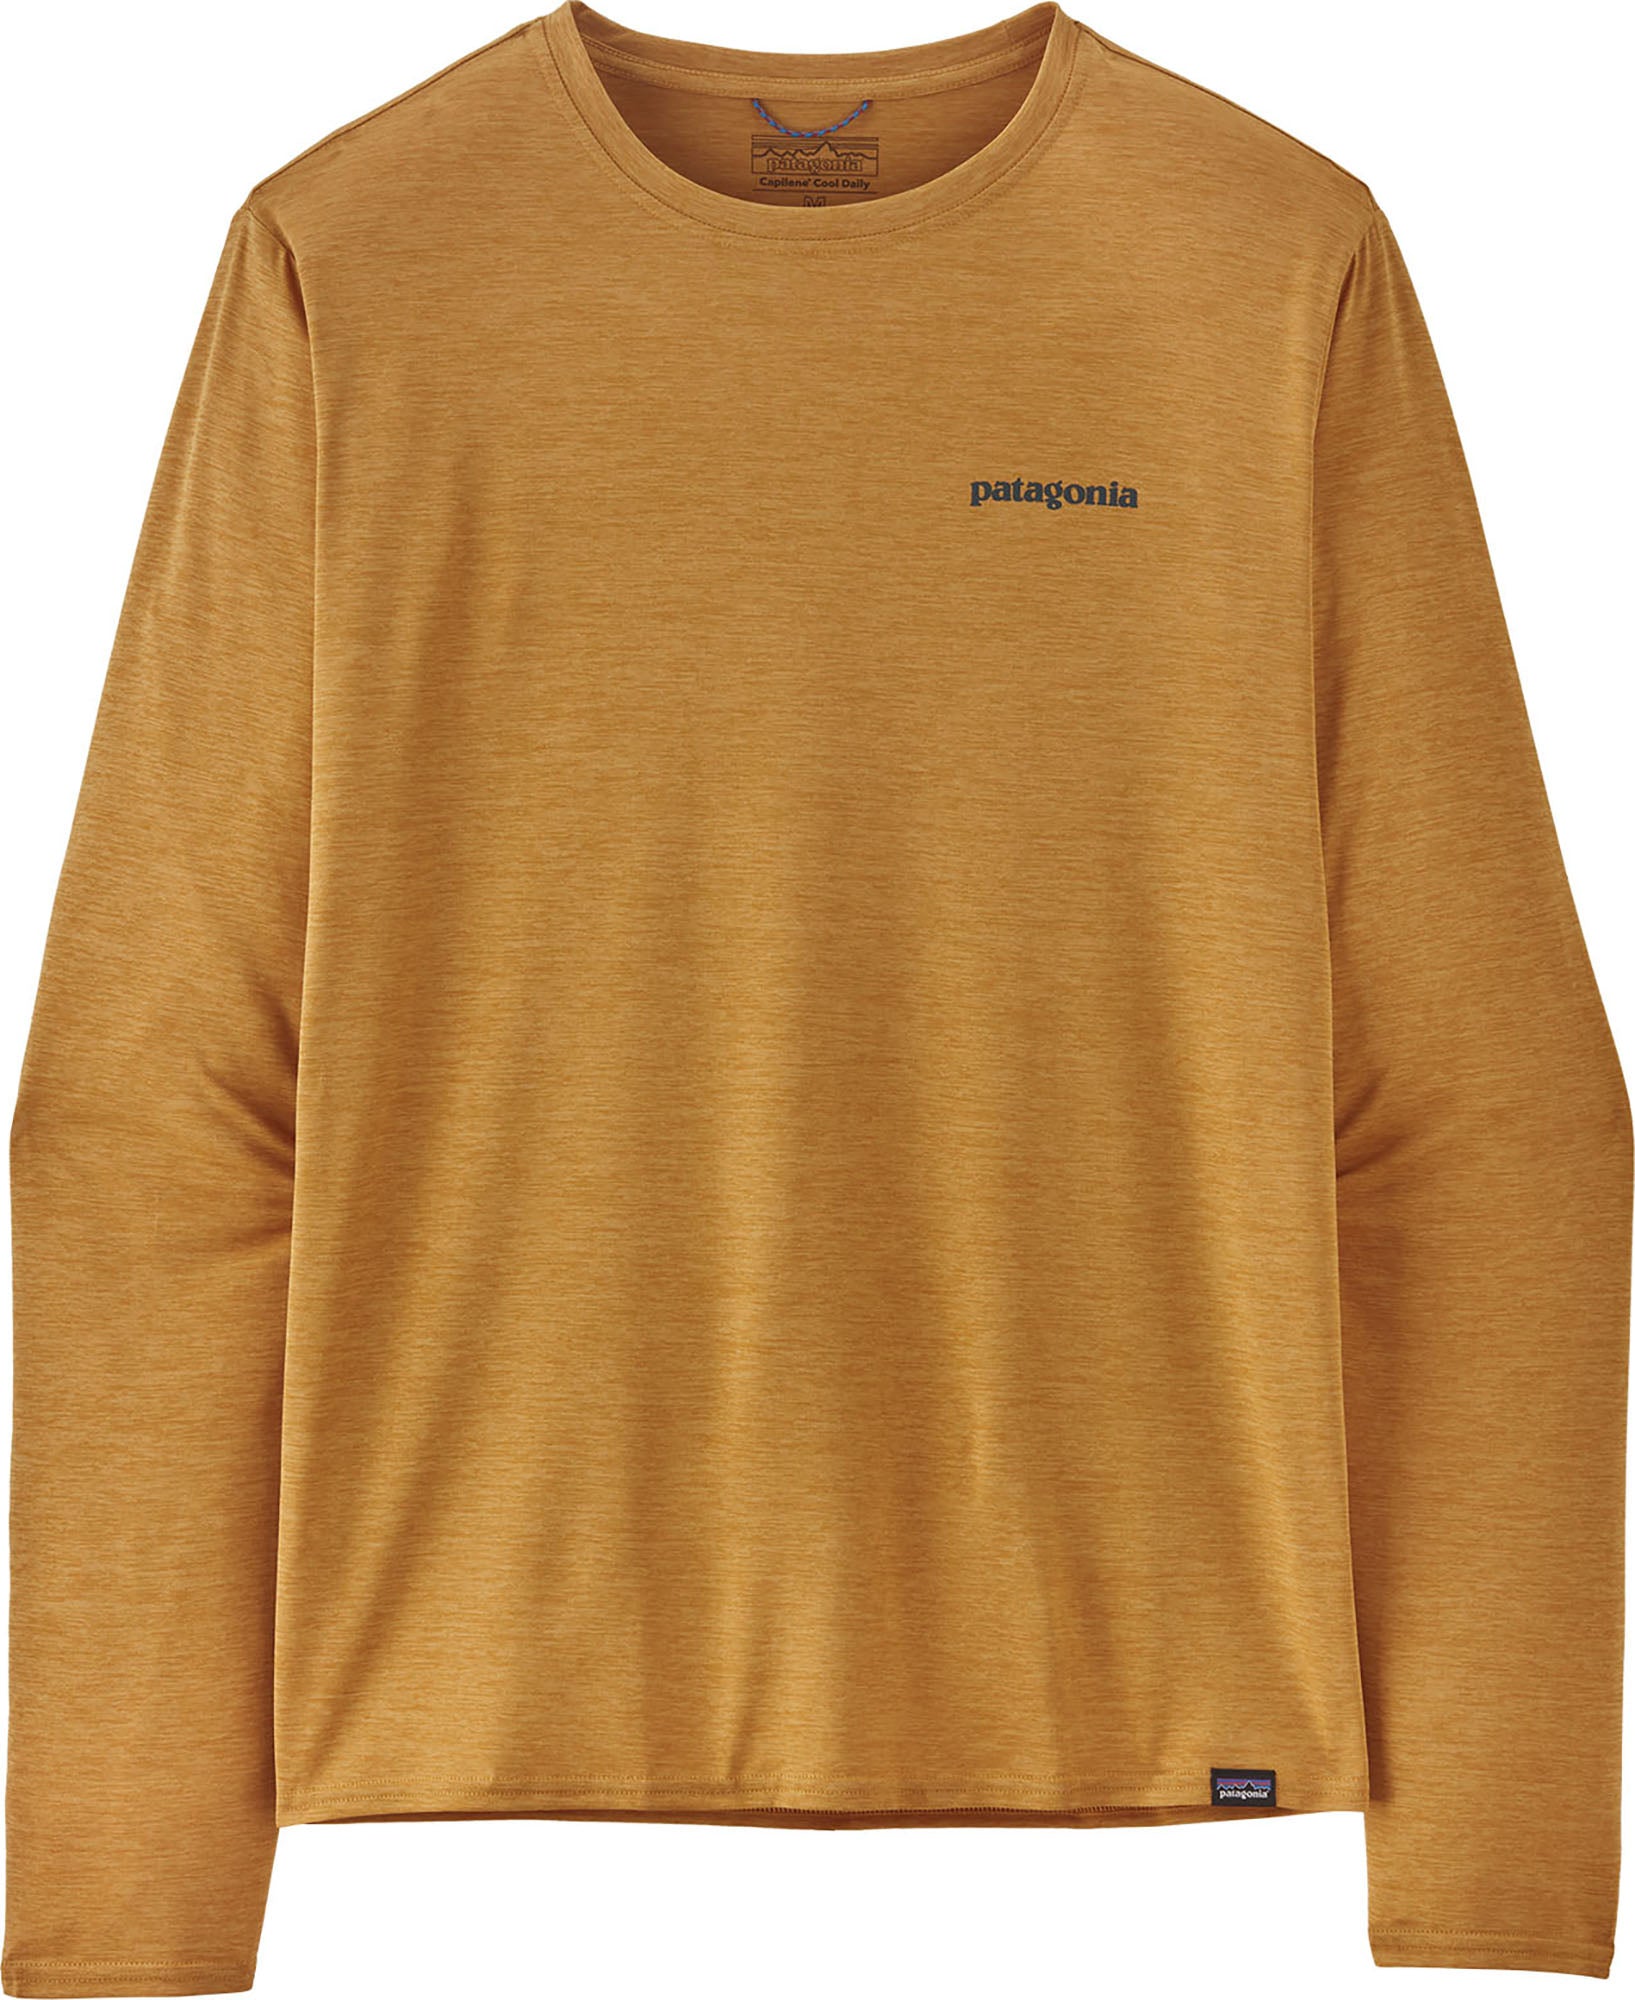 Patagonia Long-Sleeved Capilene Cool Daily Graphic Shirt-Waters - Men's M Boardshort Logo - Pufferfish Gold X-Dye